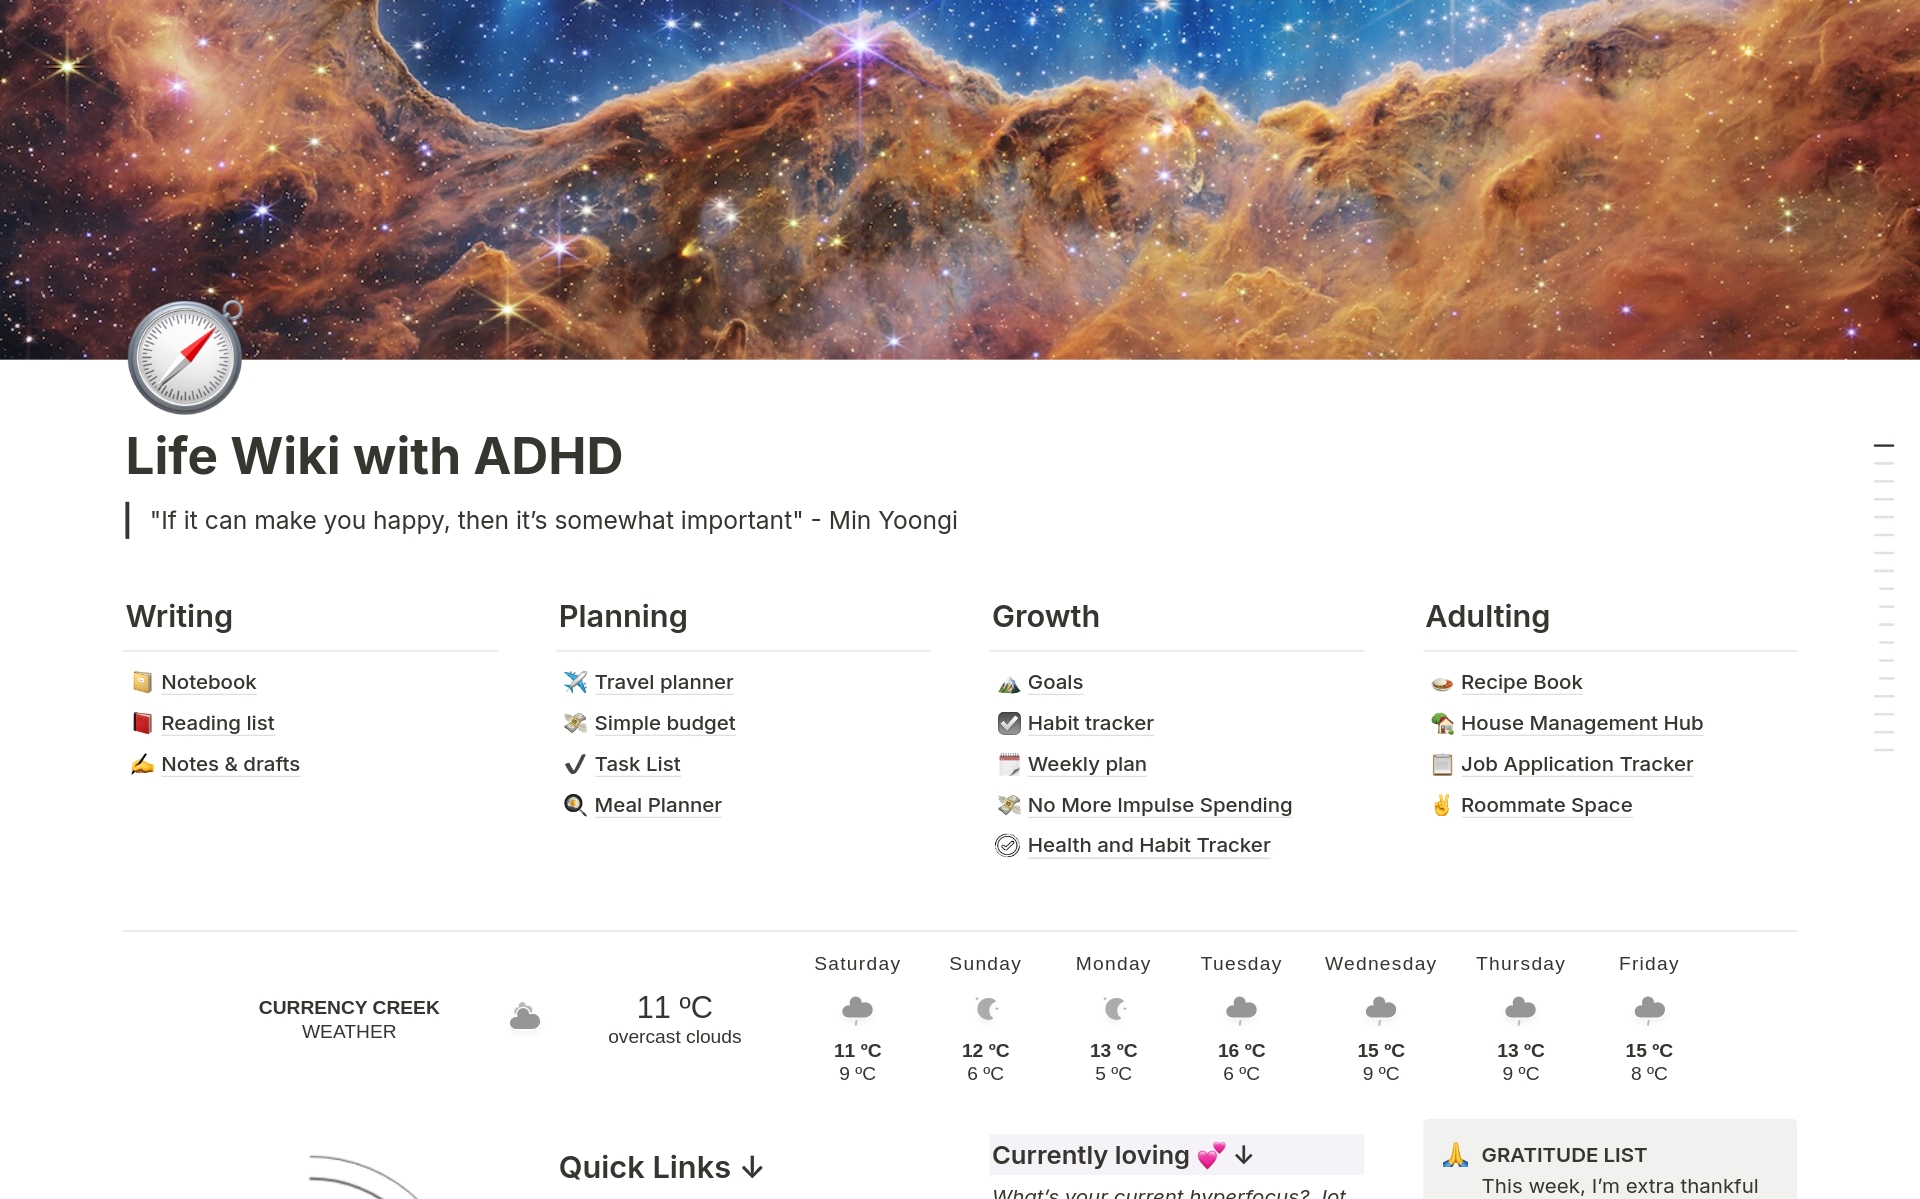 Aperçu du modèle de Life Wiki with ADHD